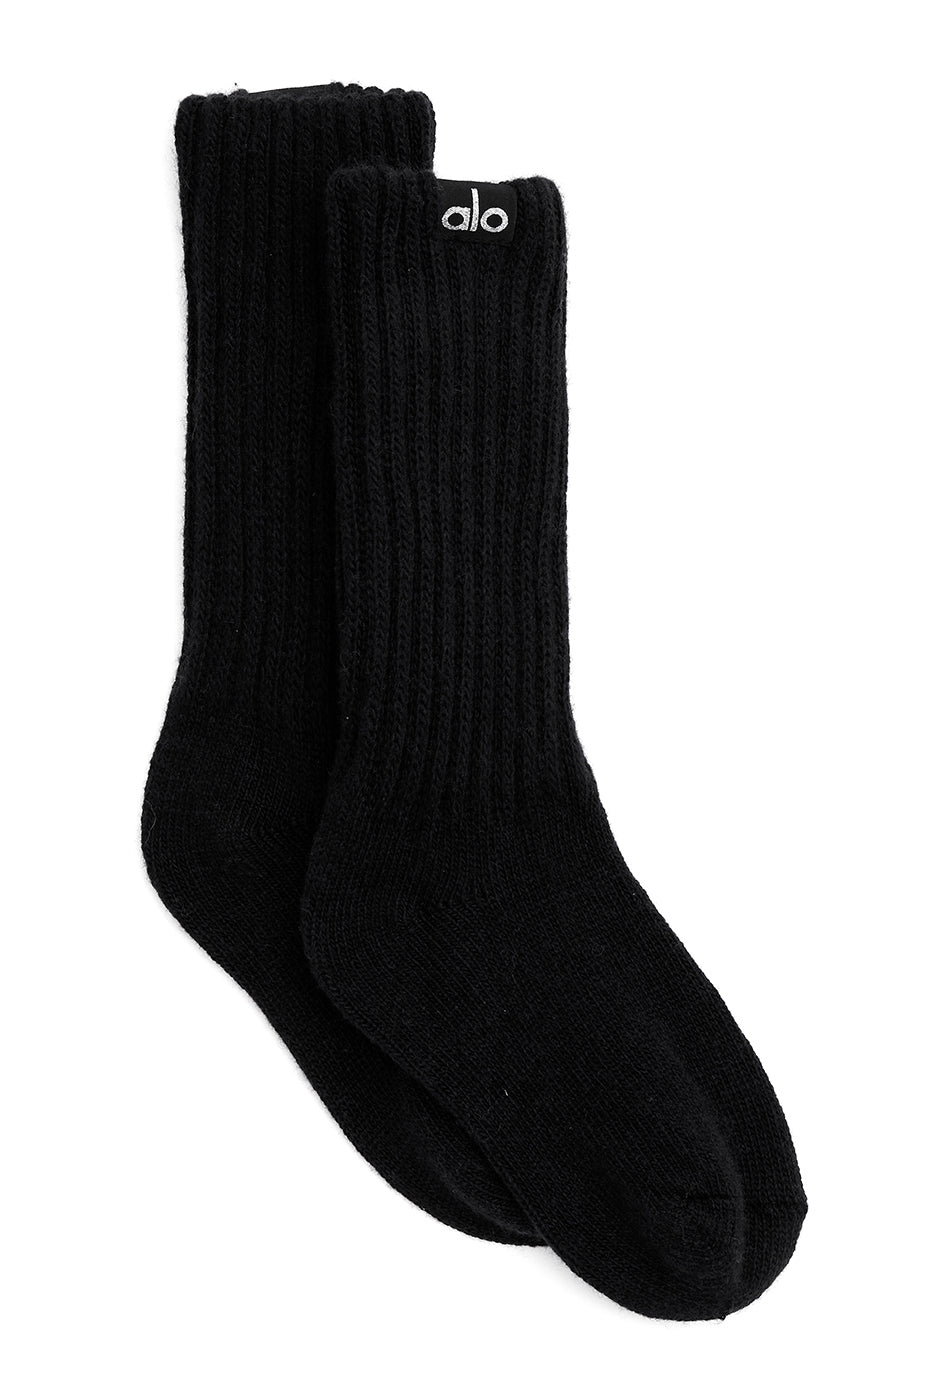 Alo Yoga Pivot Barre Socks Black / Pale Mauve / Powder Blue / Dove Grey  Heather 💸 327.000 S/M fits Women's shoe sizes 5 – 7.5; M